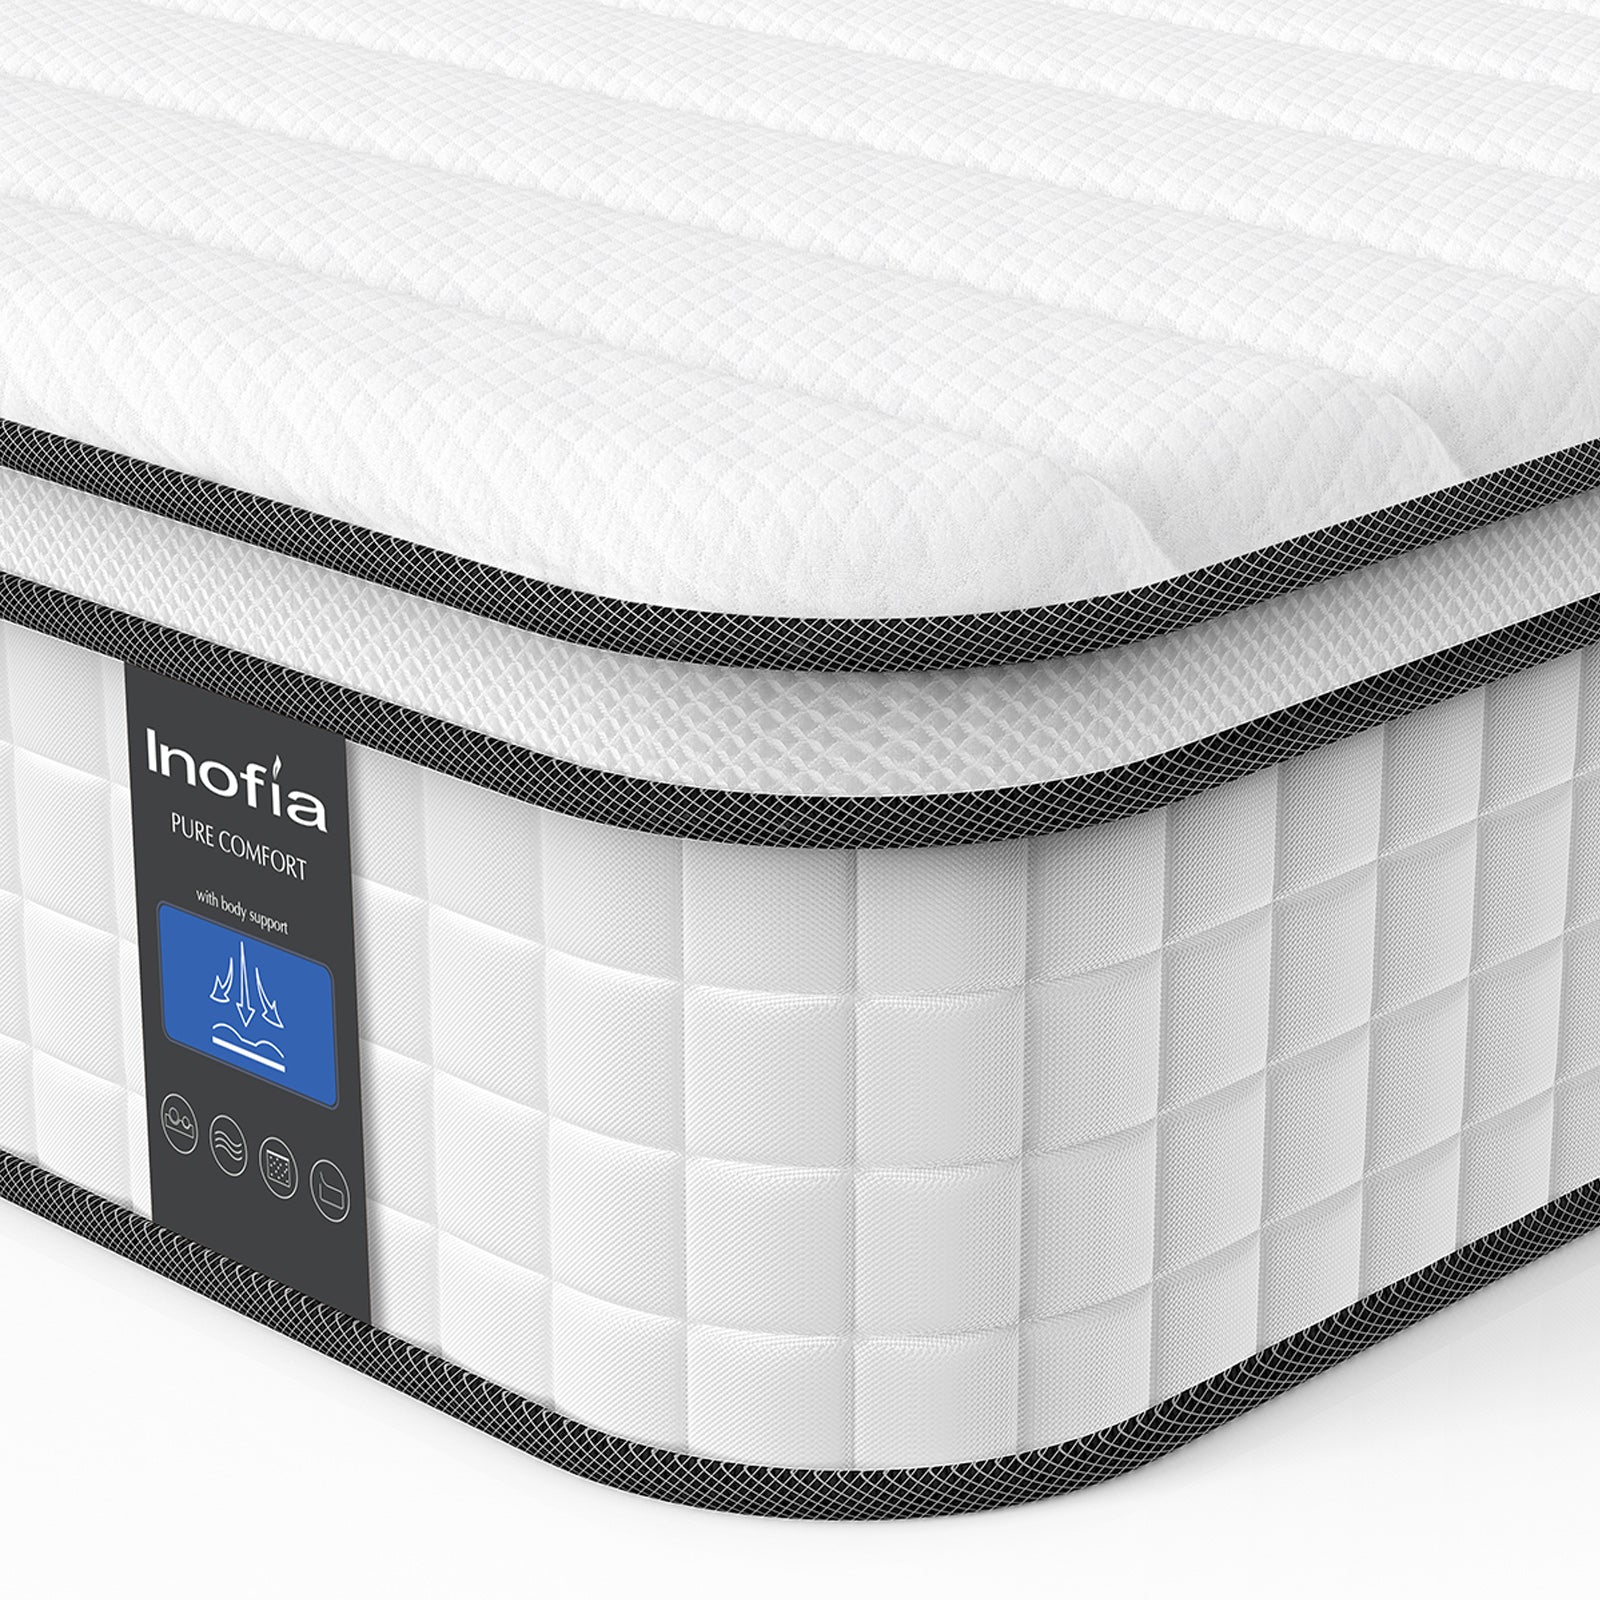 Inofia 10 Inch Premium Breathable Memory Foam and Spring Hybrid Mattress